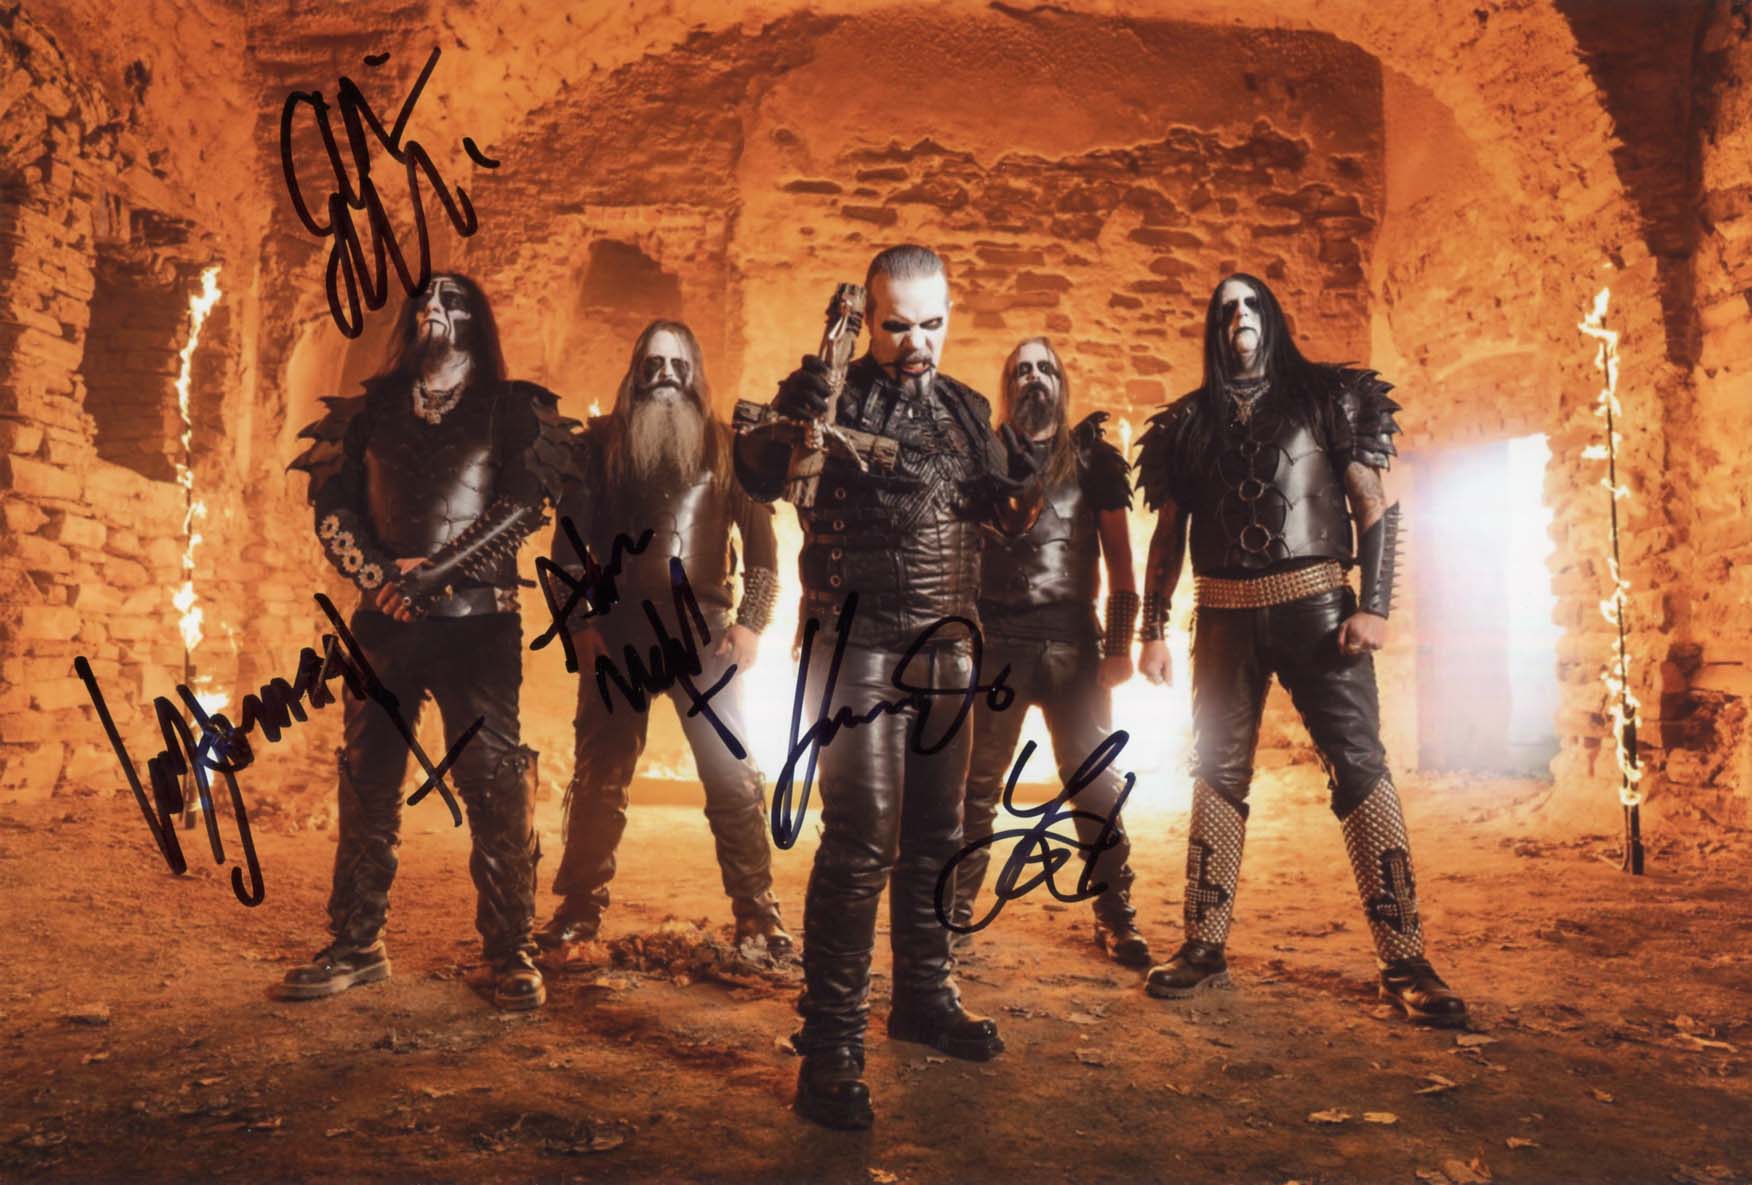  Dark Funeral Autograph Autogramm | ID 7969752580245